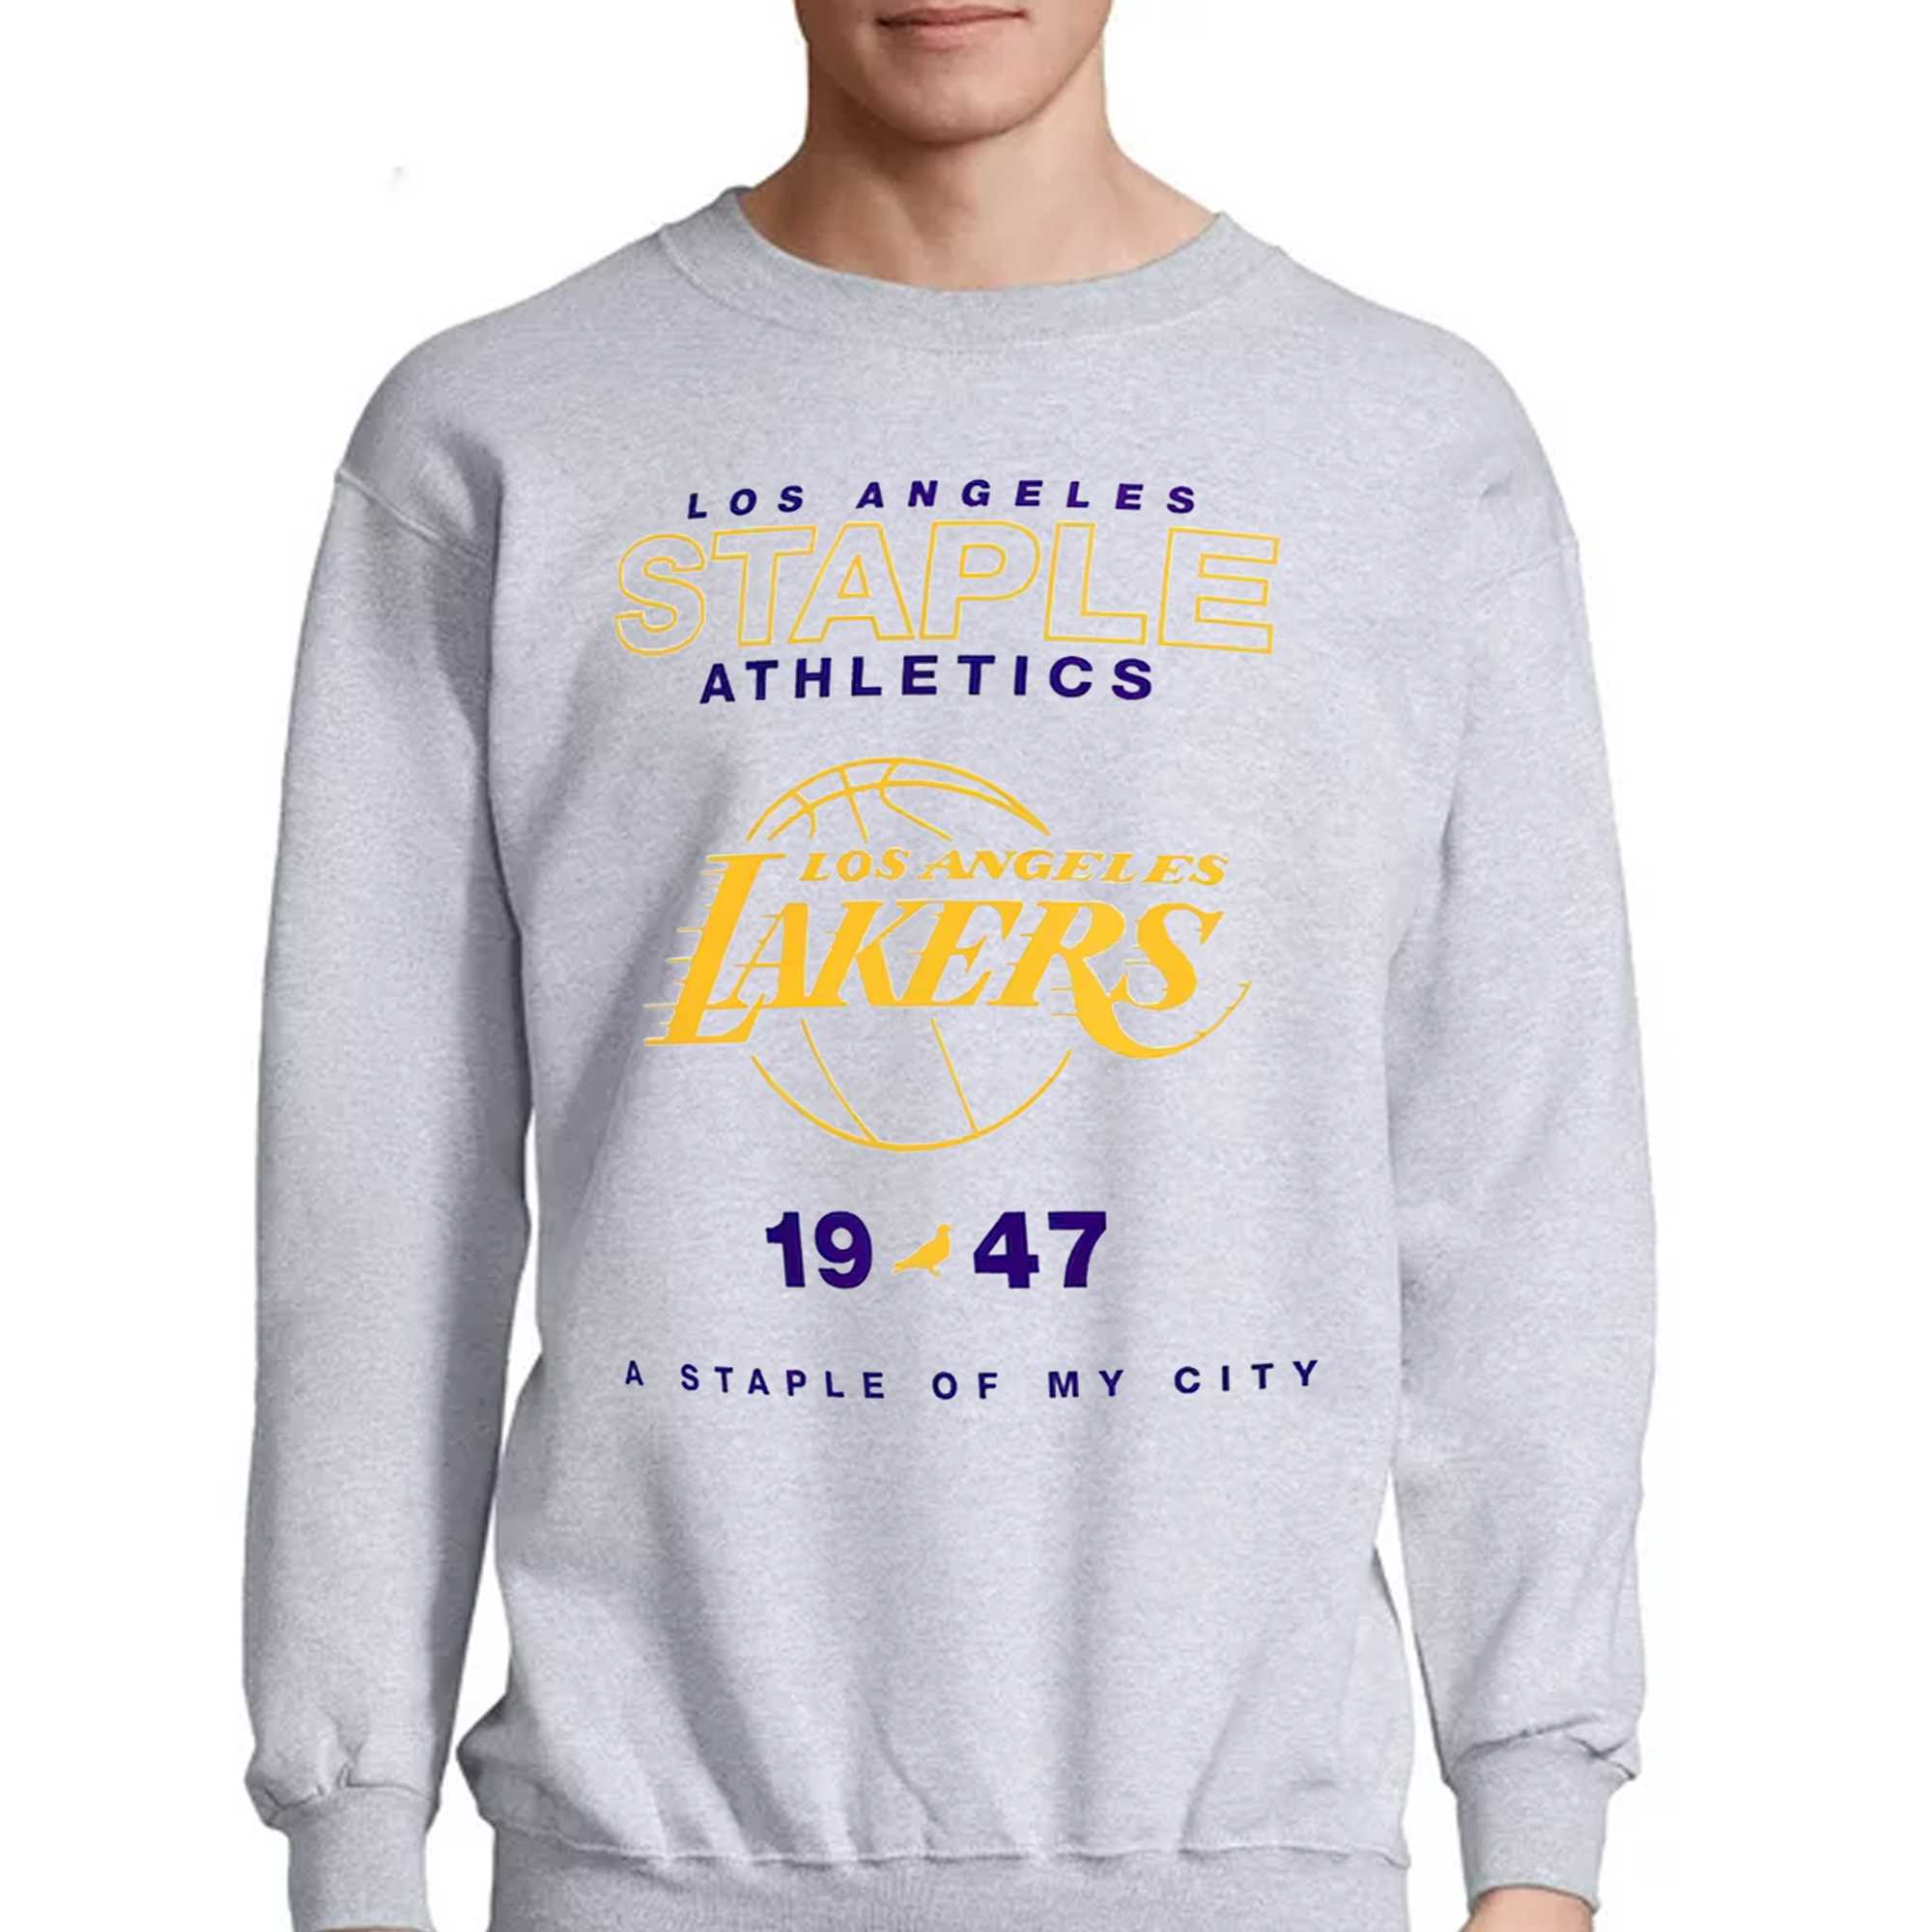 NBA Los Angeles Lakers Women's Short Sleeve Graphic Tee 